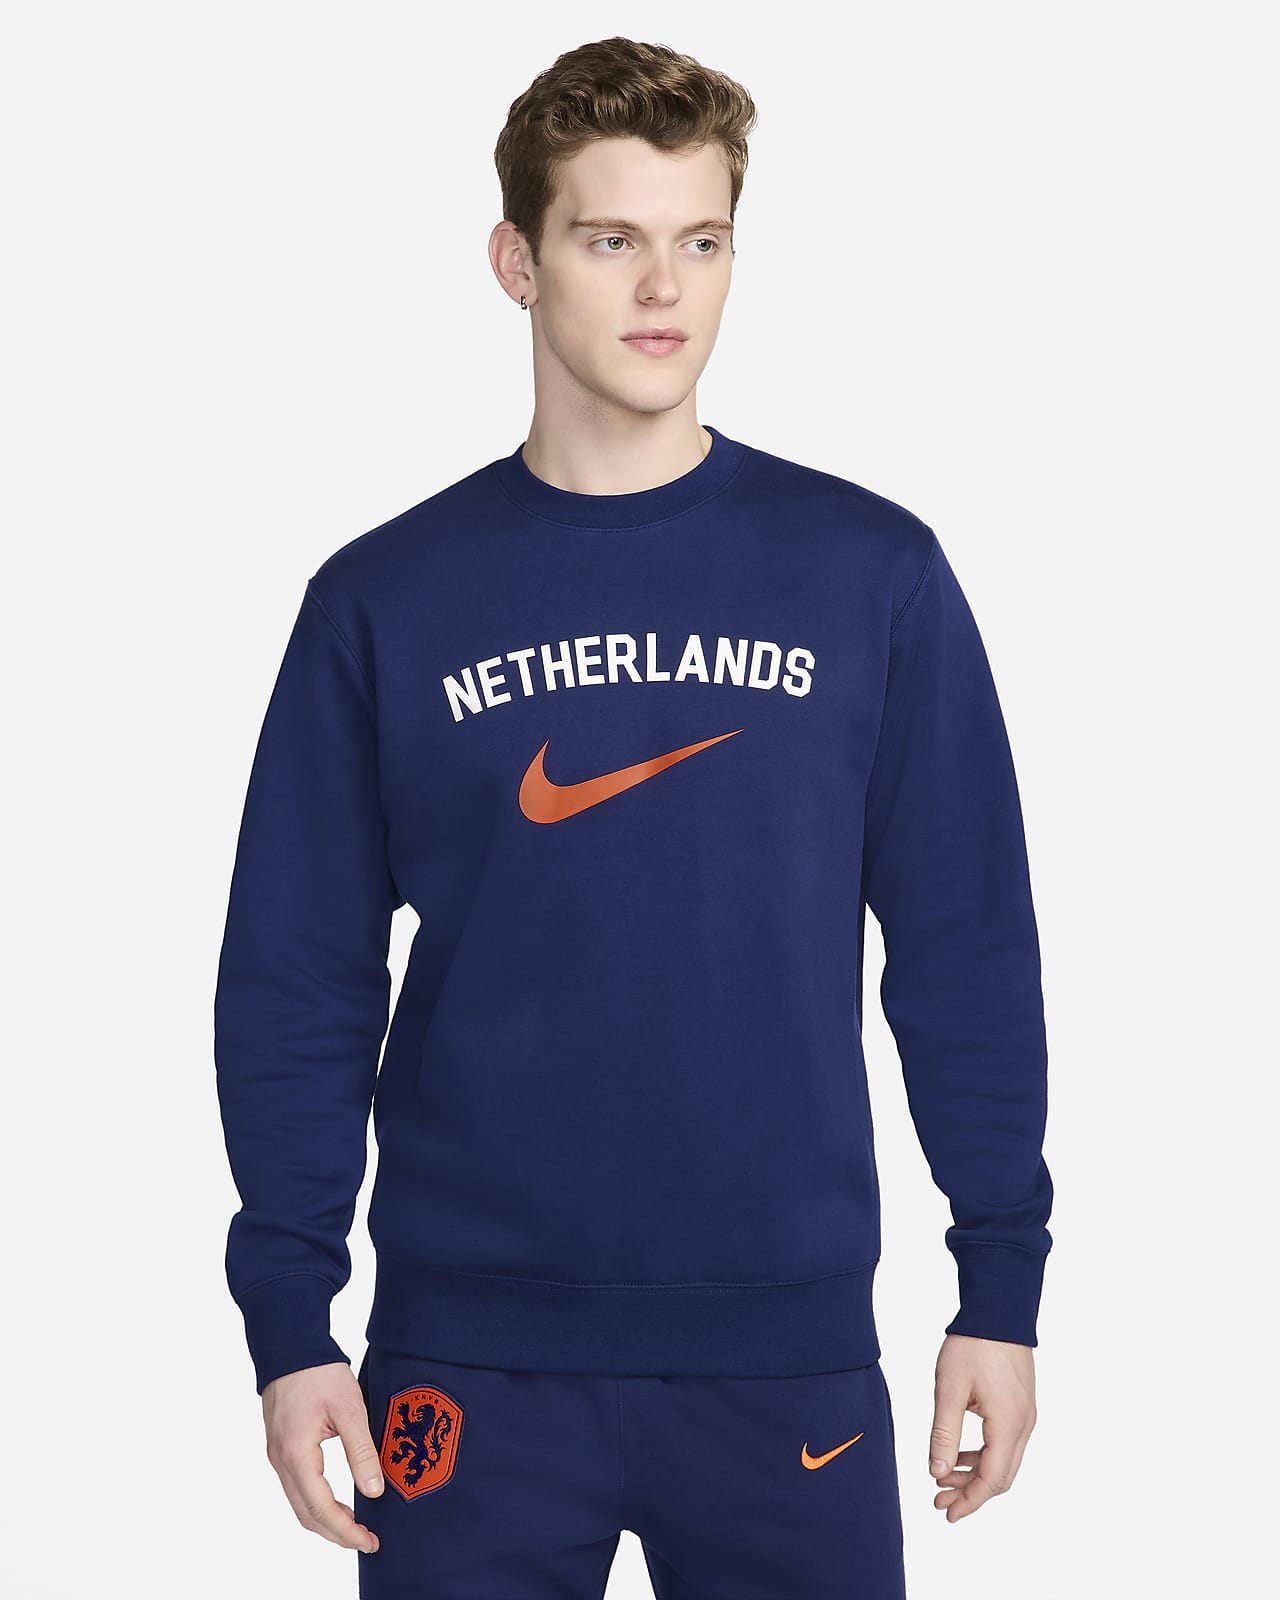 Nederland Club Fleece Nike Football sweatshirt med rund hals til herre